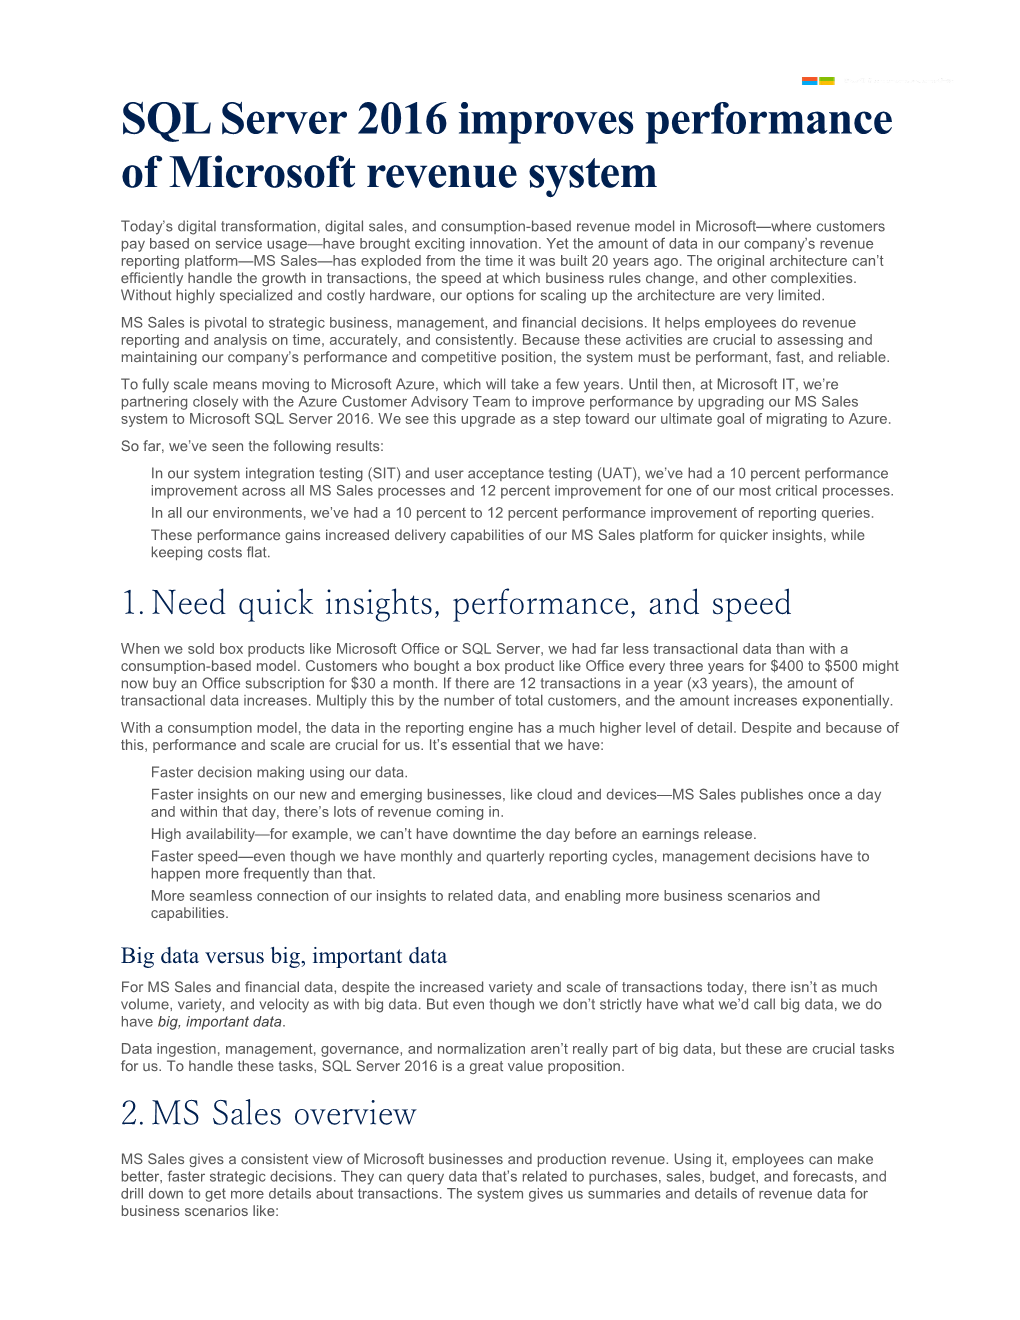 SQL Server 2016 Improves Performance of Microsoft Revenue System